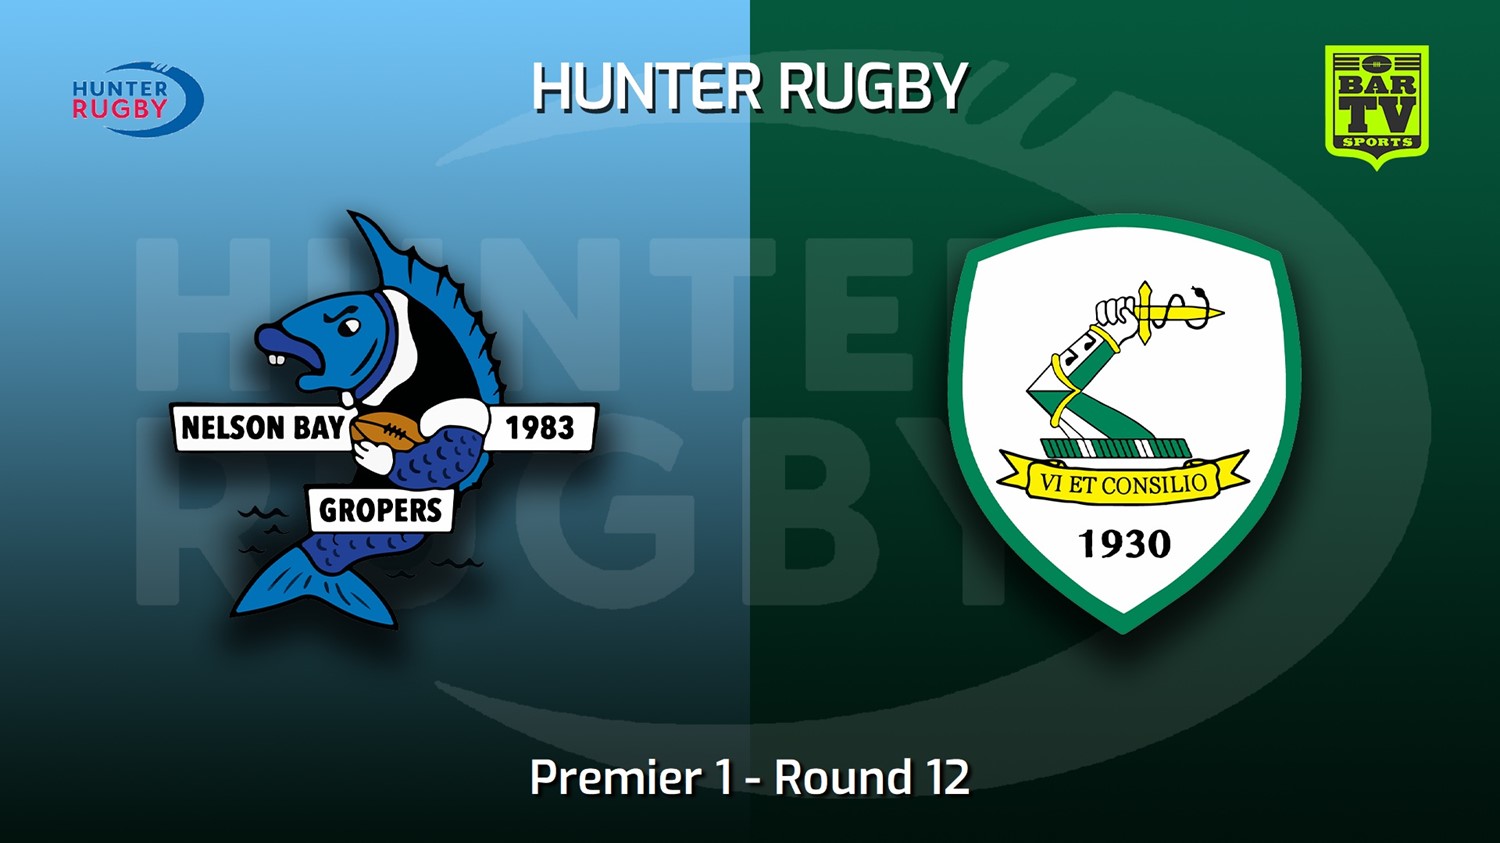 220716-Hunter Rugby Round 12 - Premier 1 - Nelson Bay Gropers v Merewether Carlton Slate Image